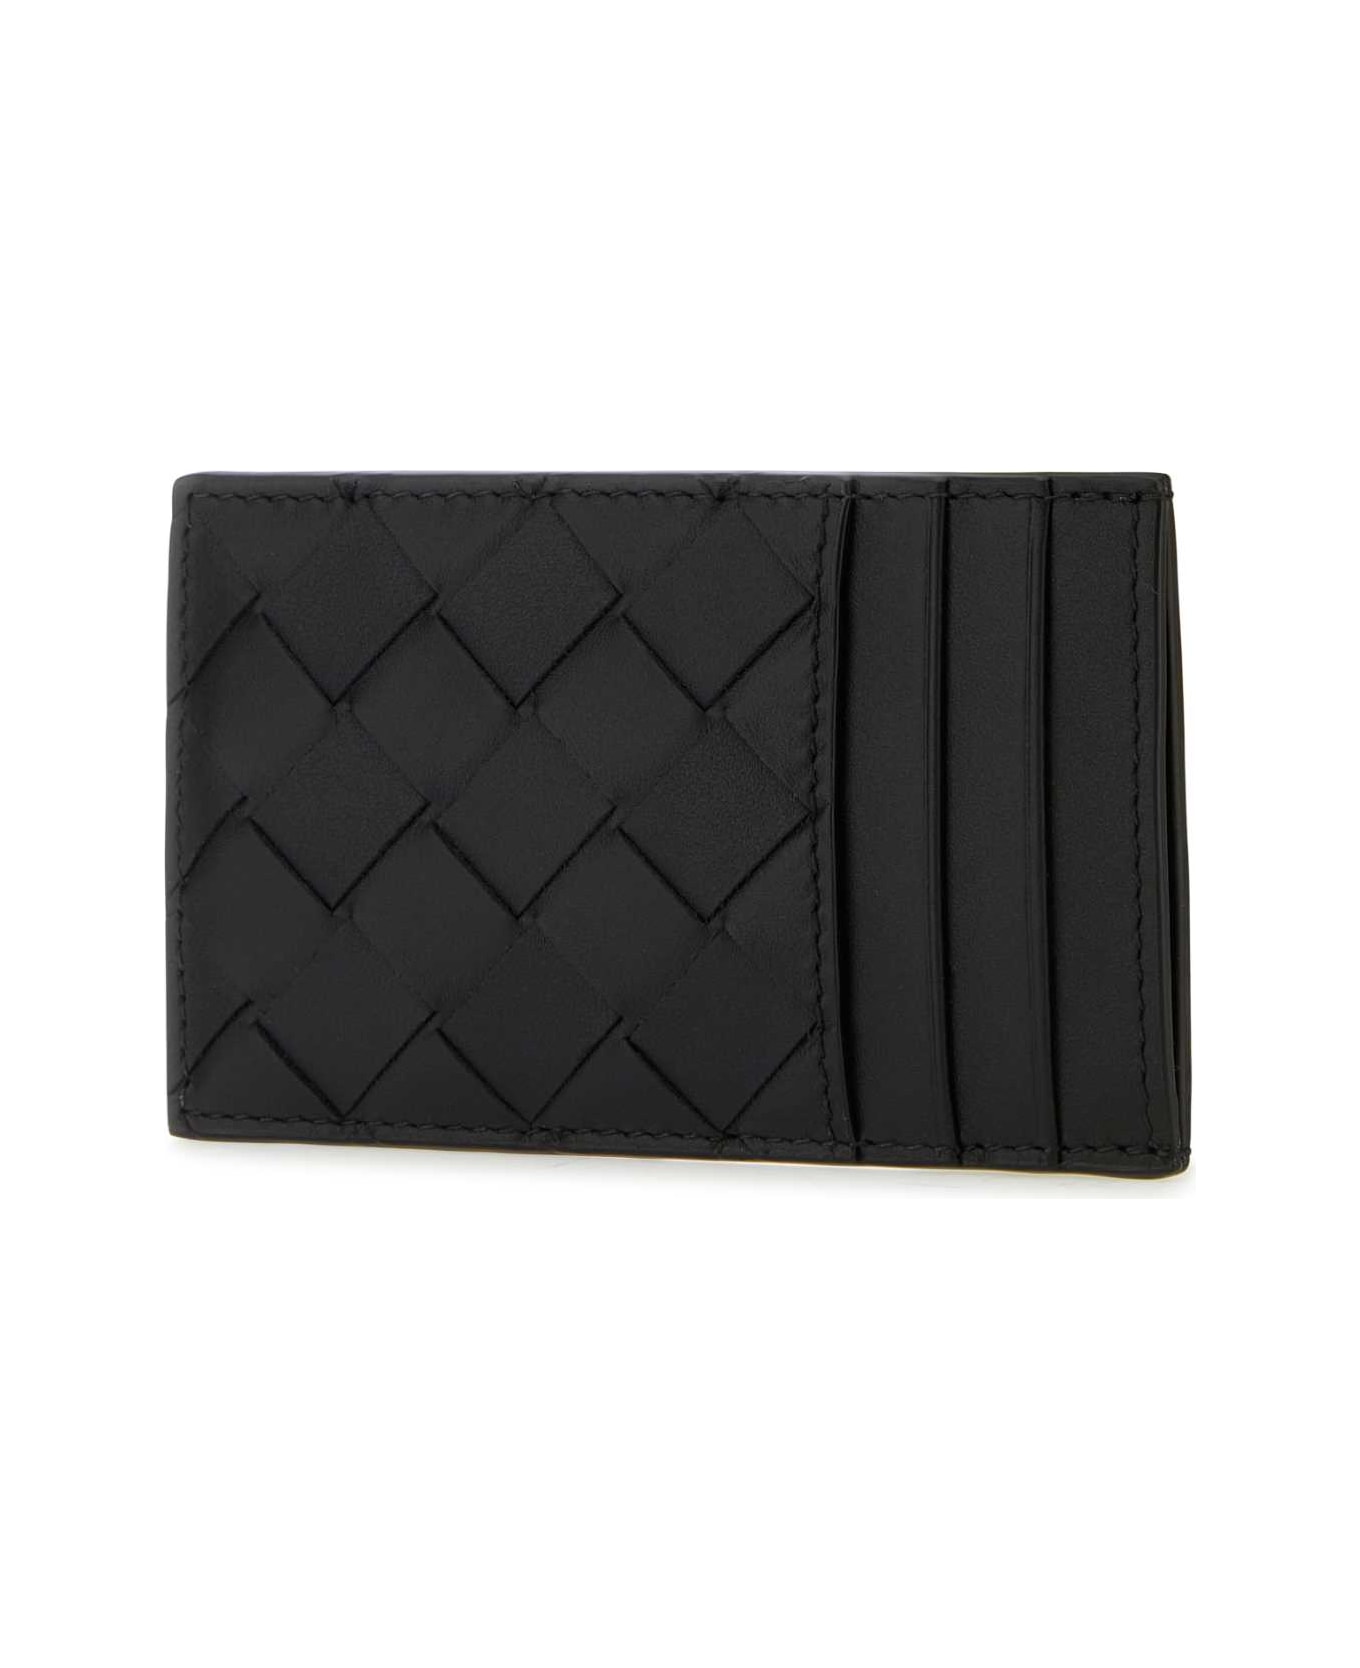 Bottega Veneta Black Leather Cardholder - BLACKSILVER 財布